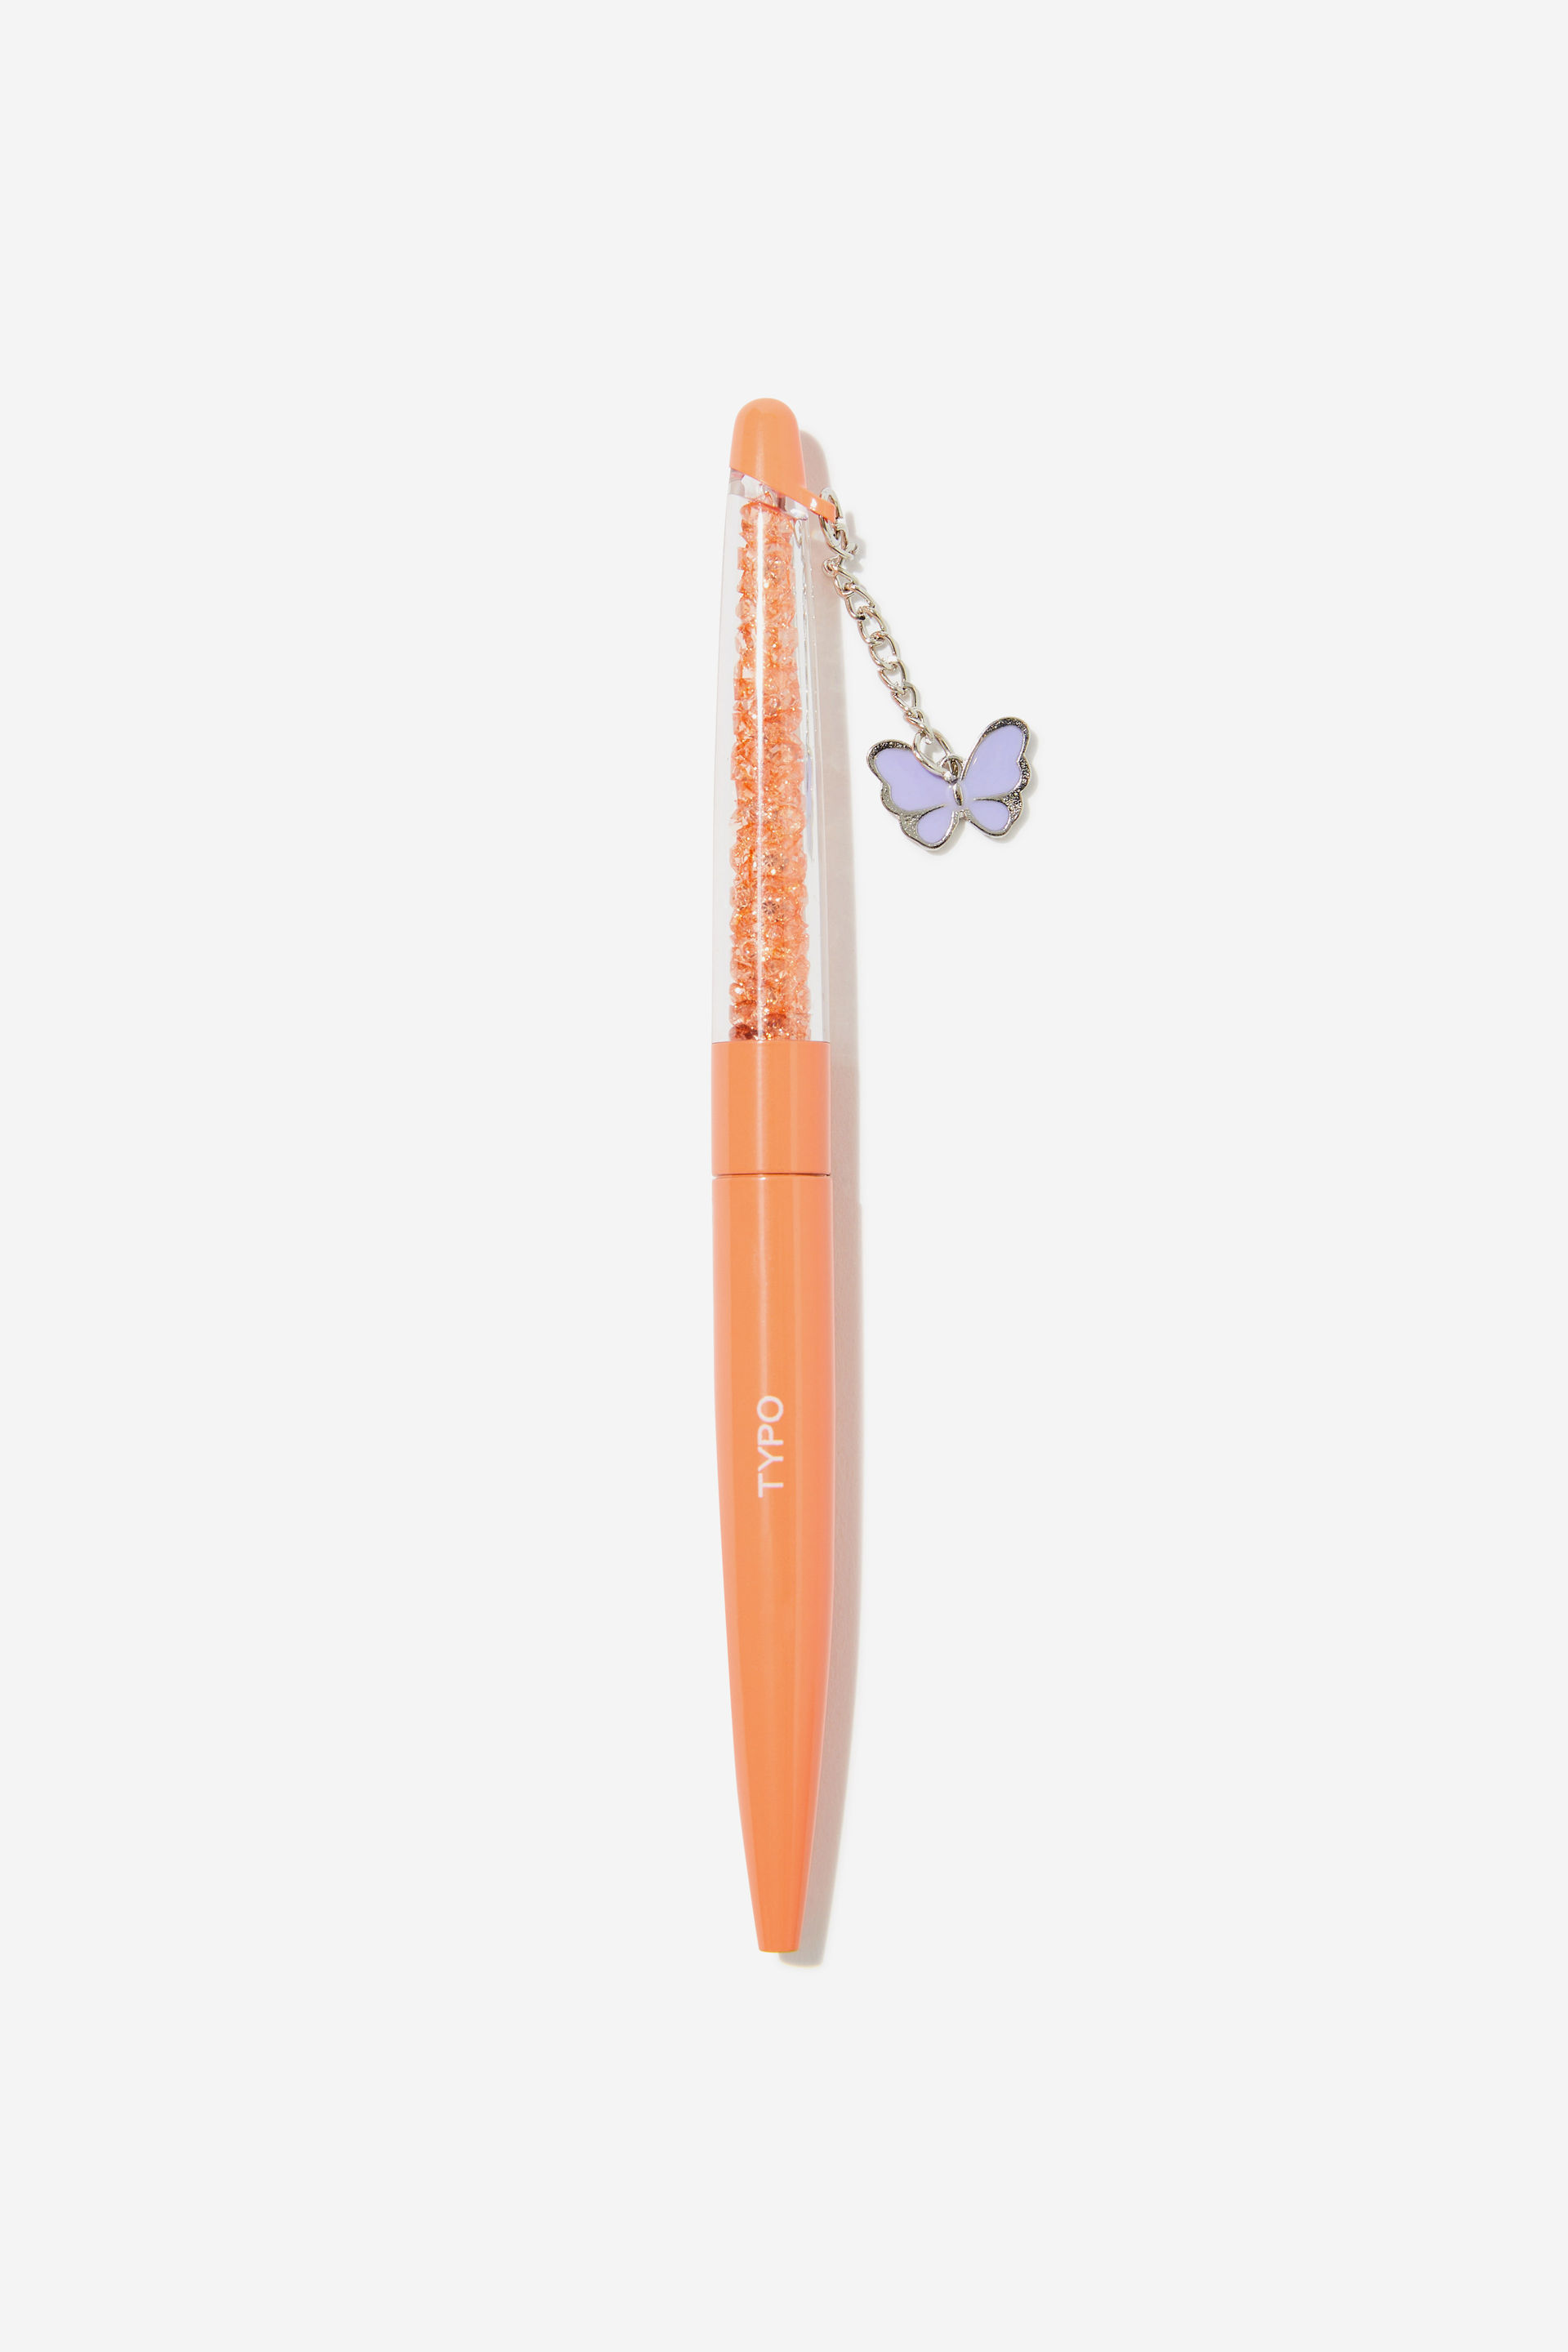 Typo - Charm Pen - Apricot crush purple butterfly